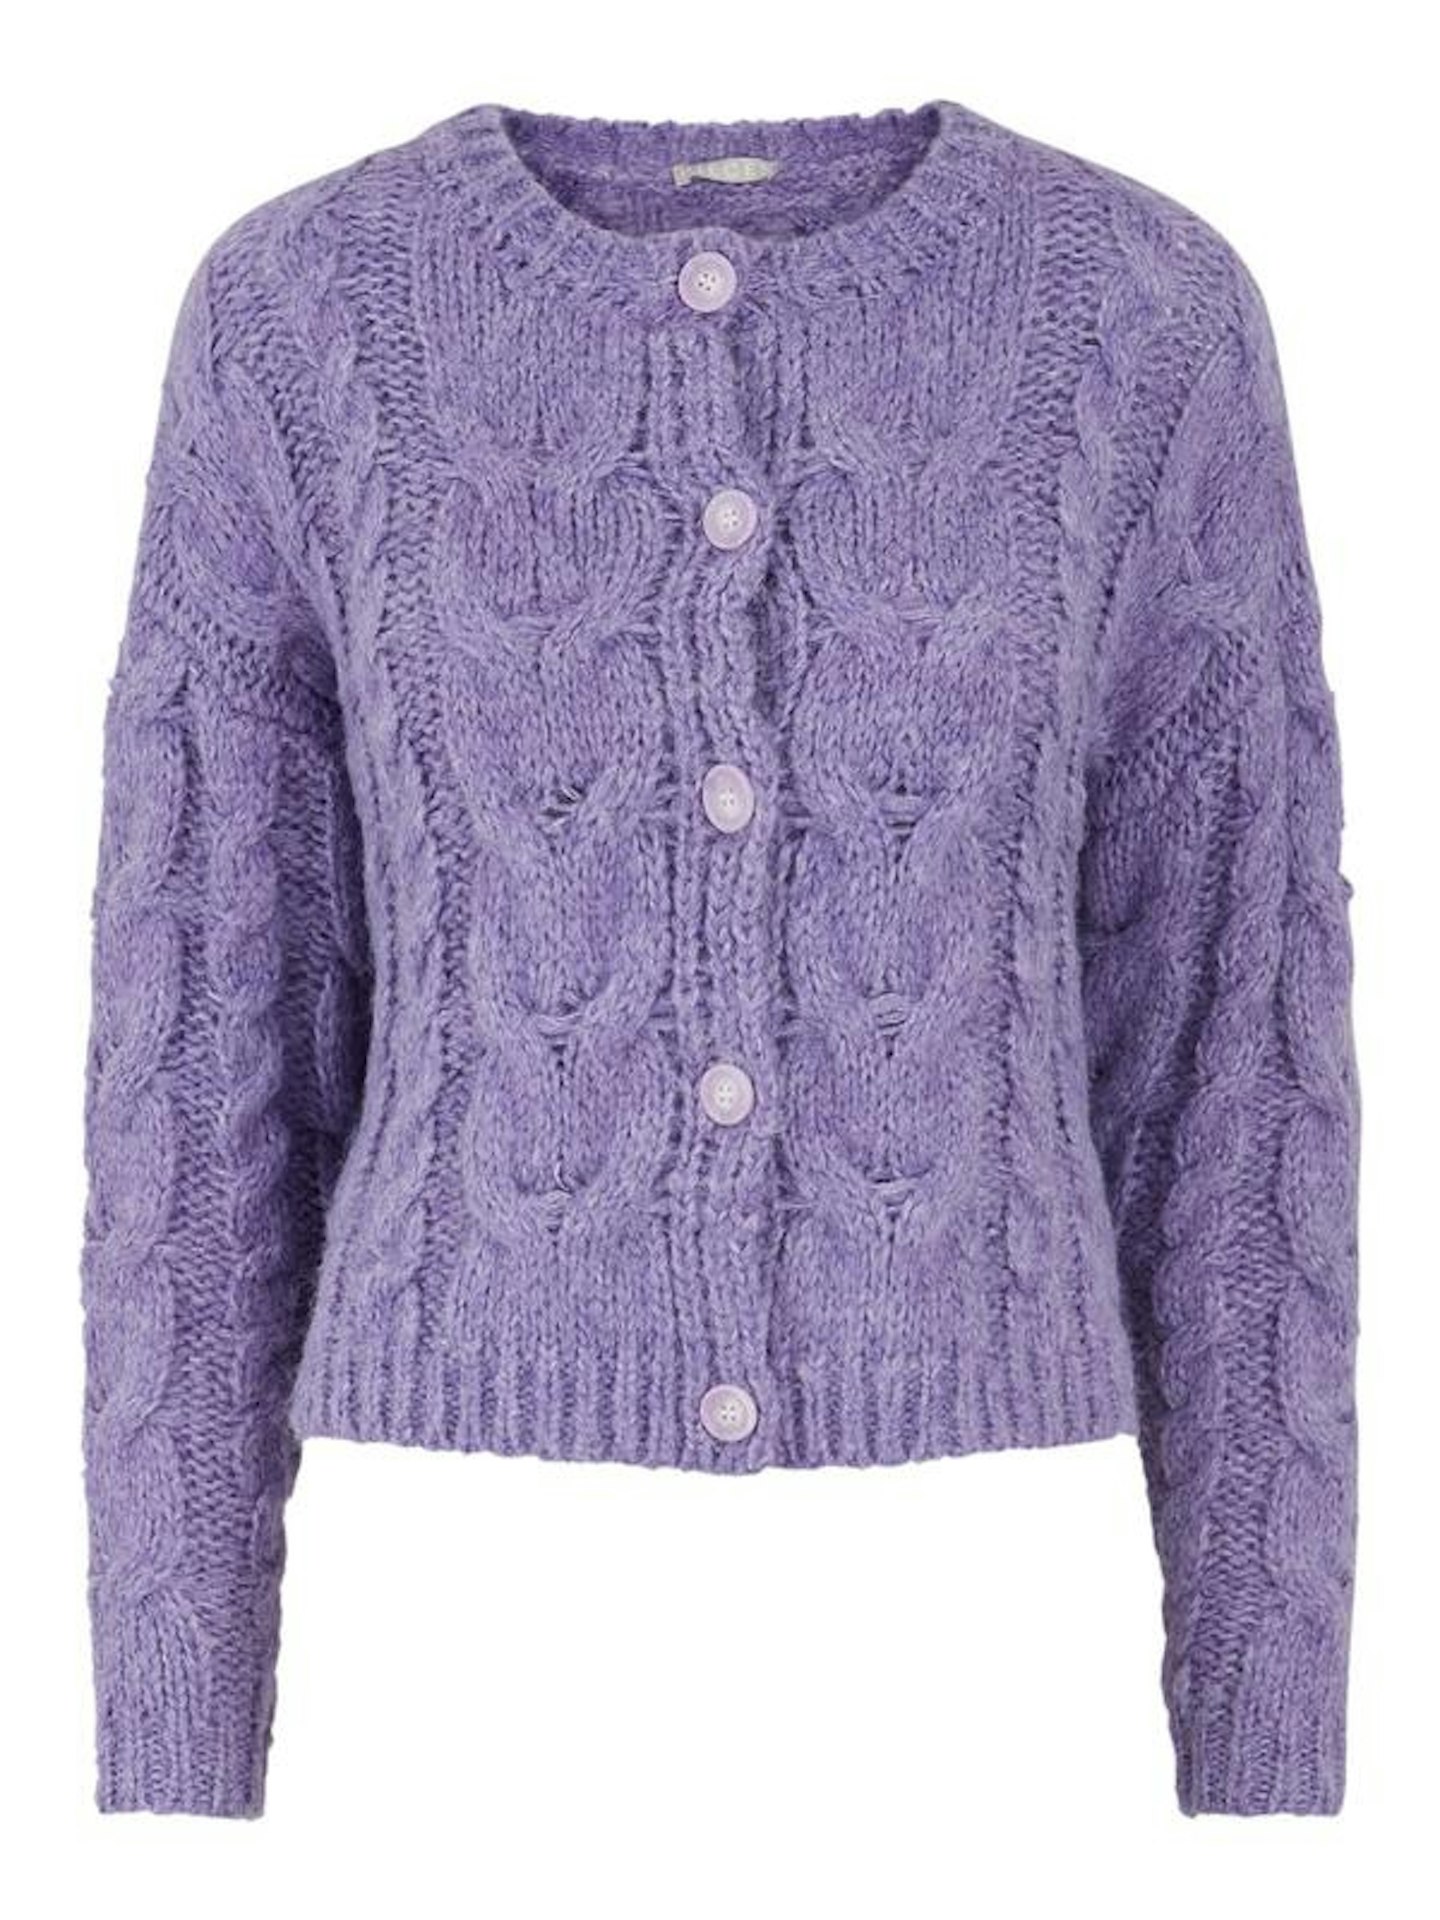 Iris & Violet, Knitted Purple Cardigan, £38